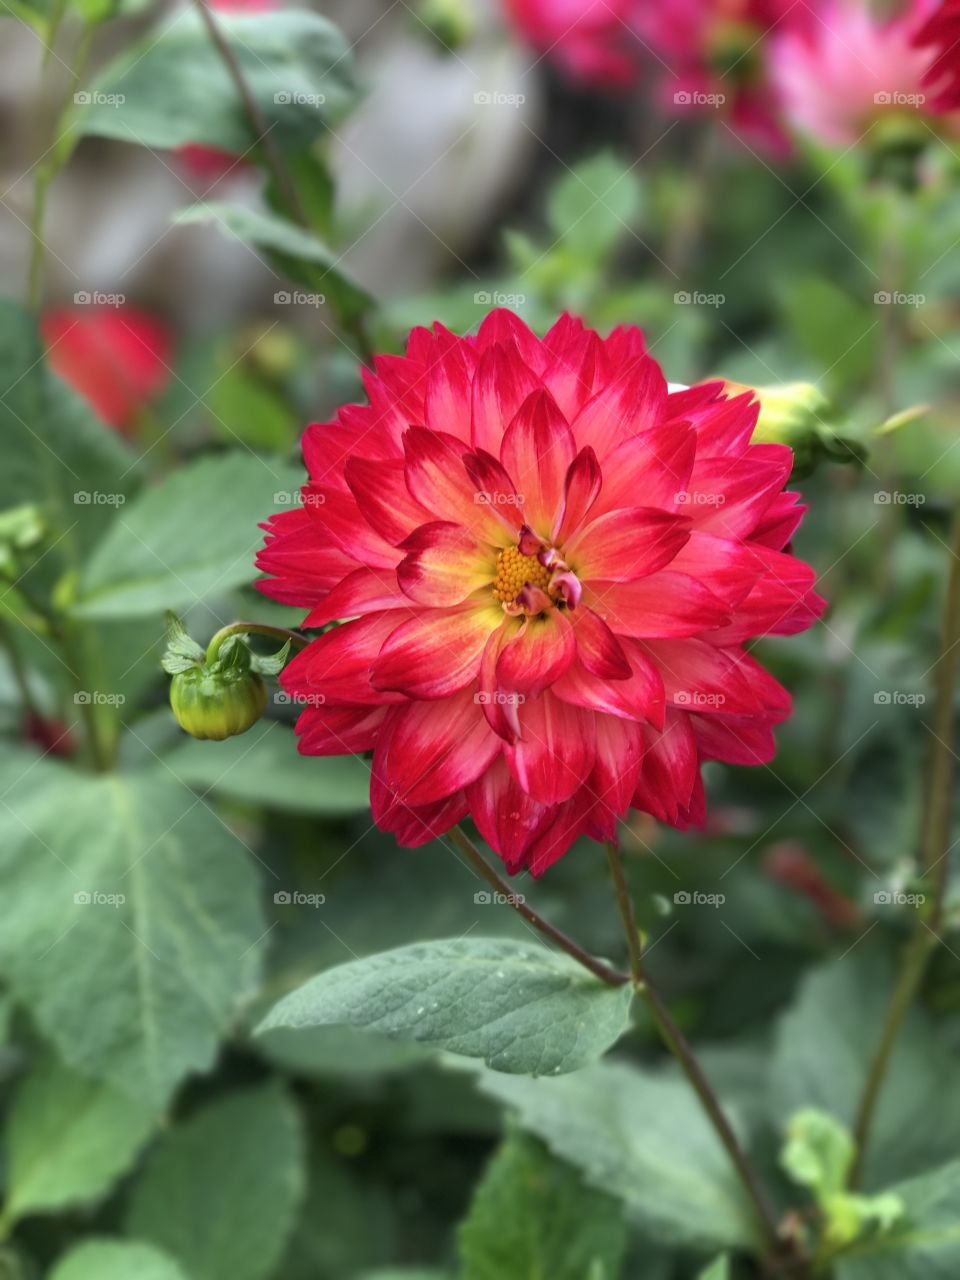 
Red Flower 